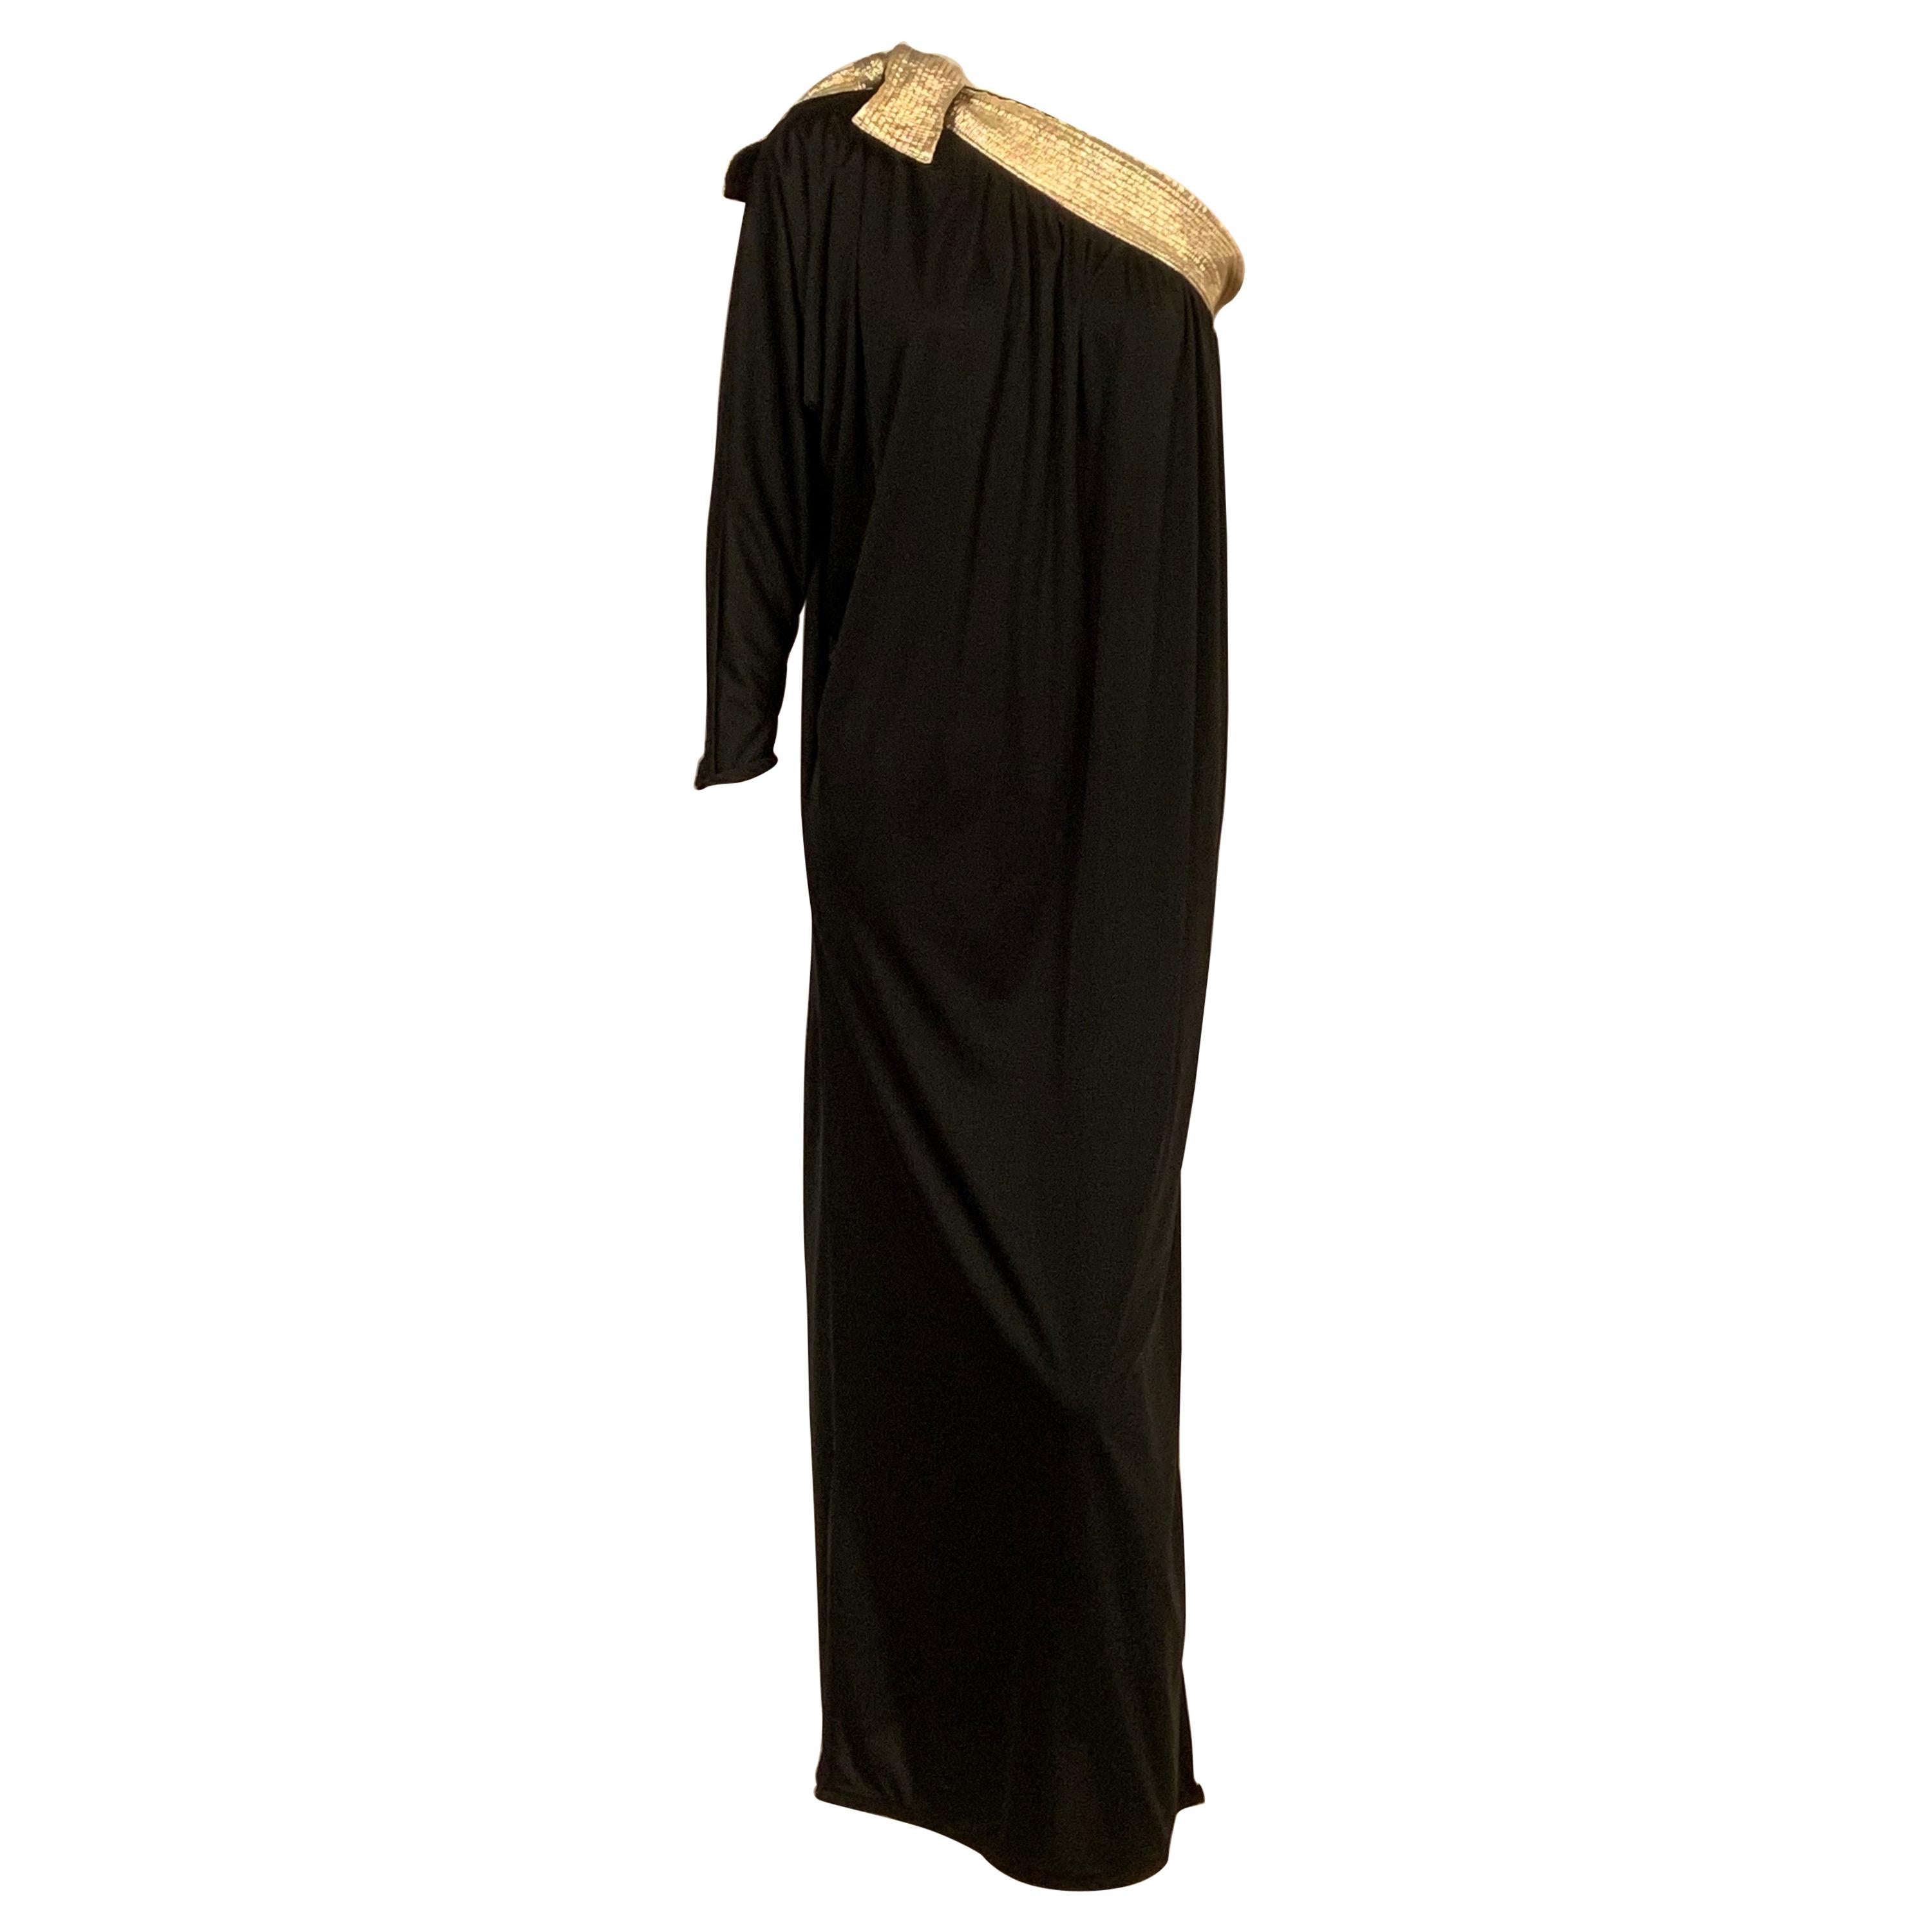 Bill Tice Gold Trimmed One Shoulder Black Evening or At Home Dress For Sale